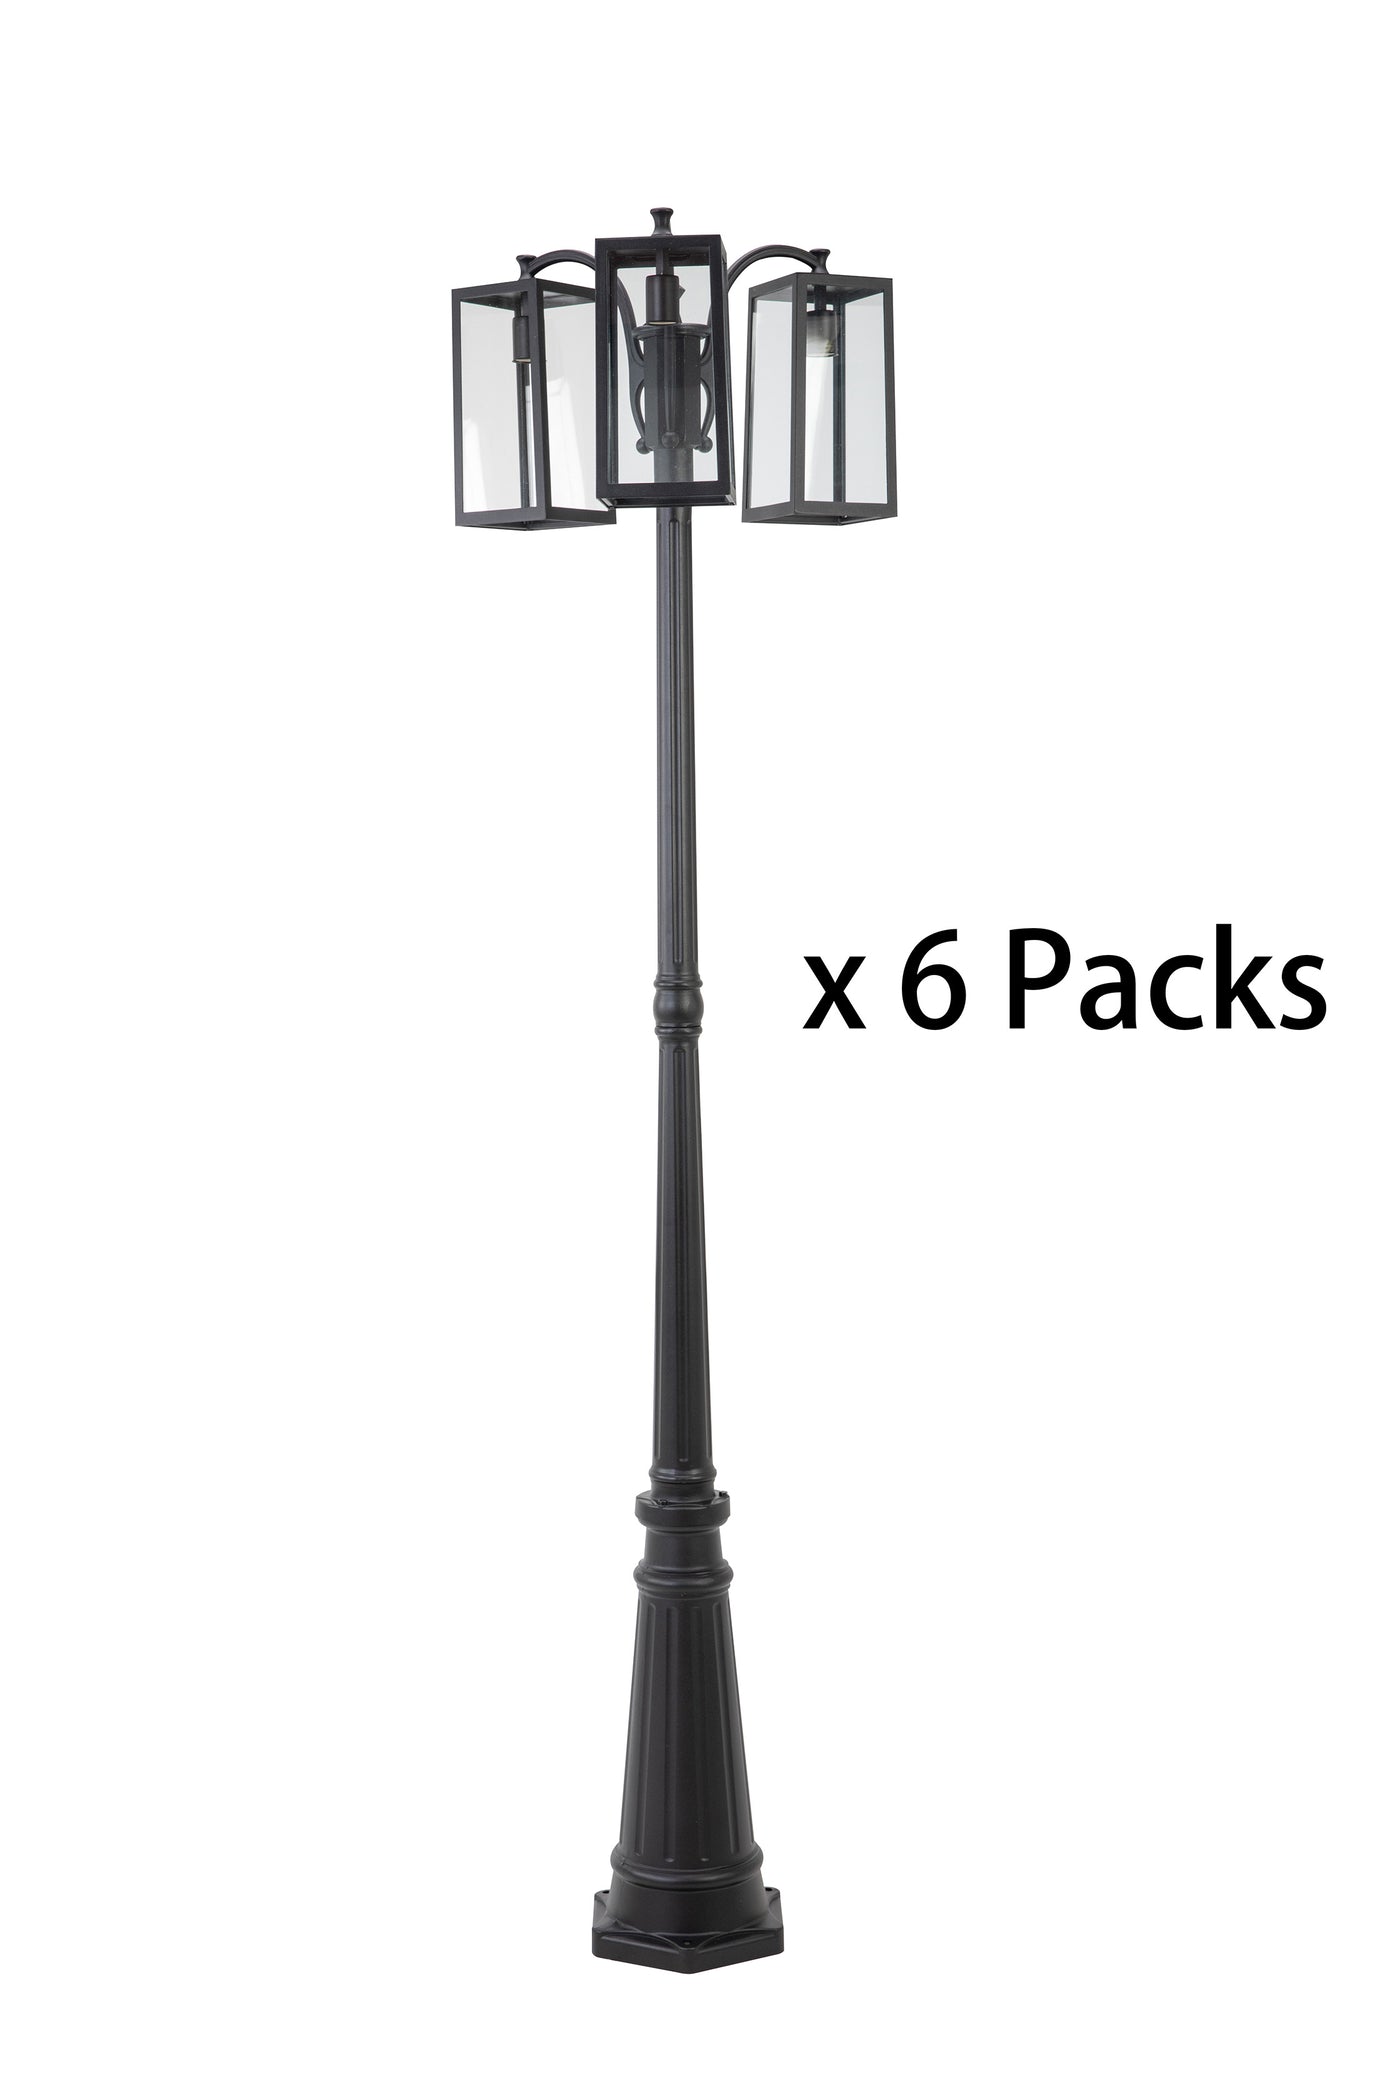 Bundle of LUTEC-HIGH POST 3-Head Die-Cast Aluminum LED Outdoor Hard Wired Street Light (Head & Pole), Black, 6 Packs